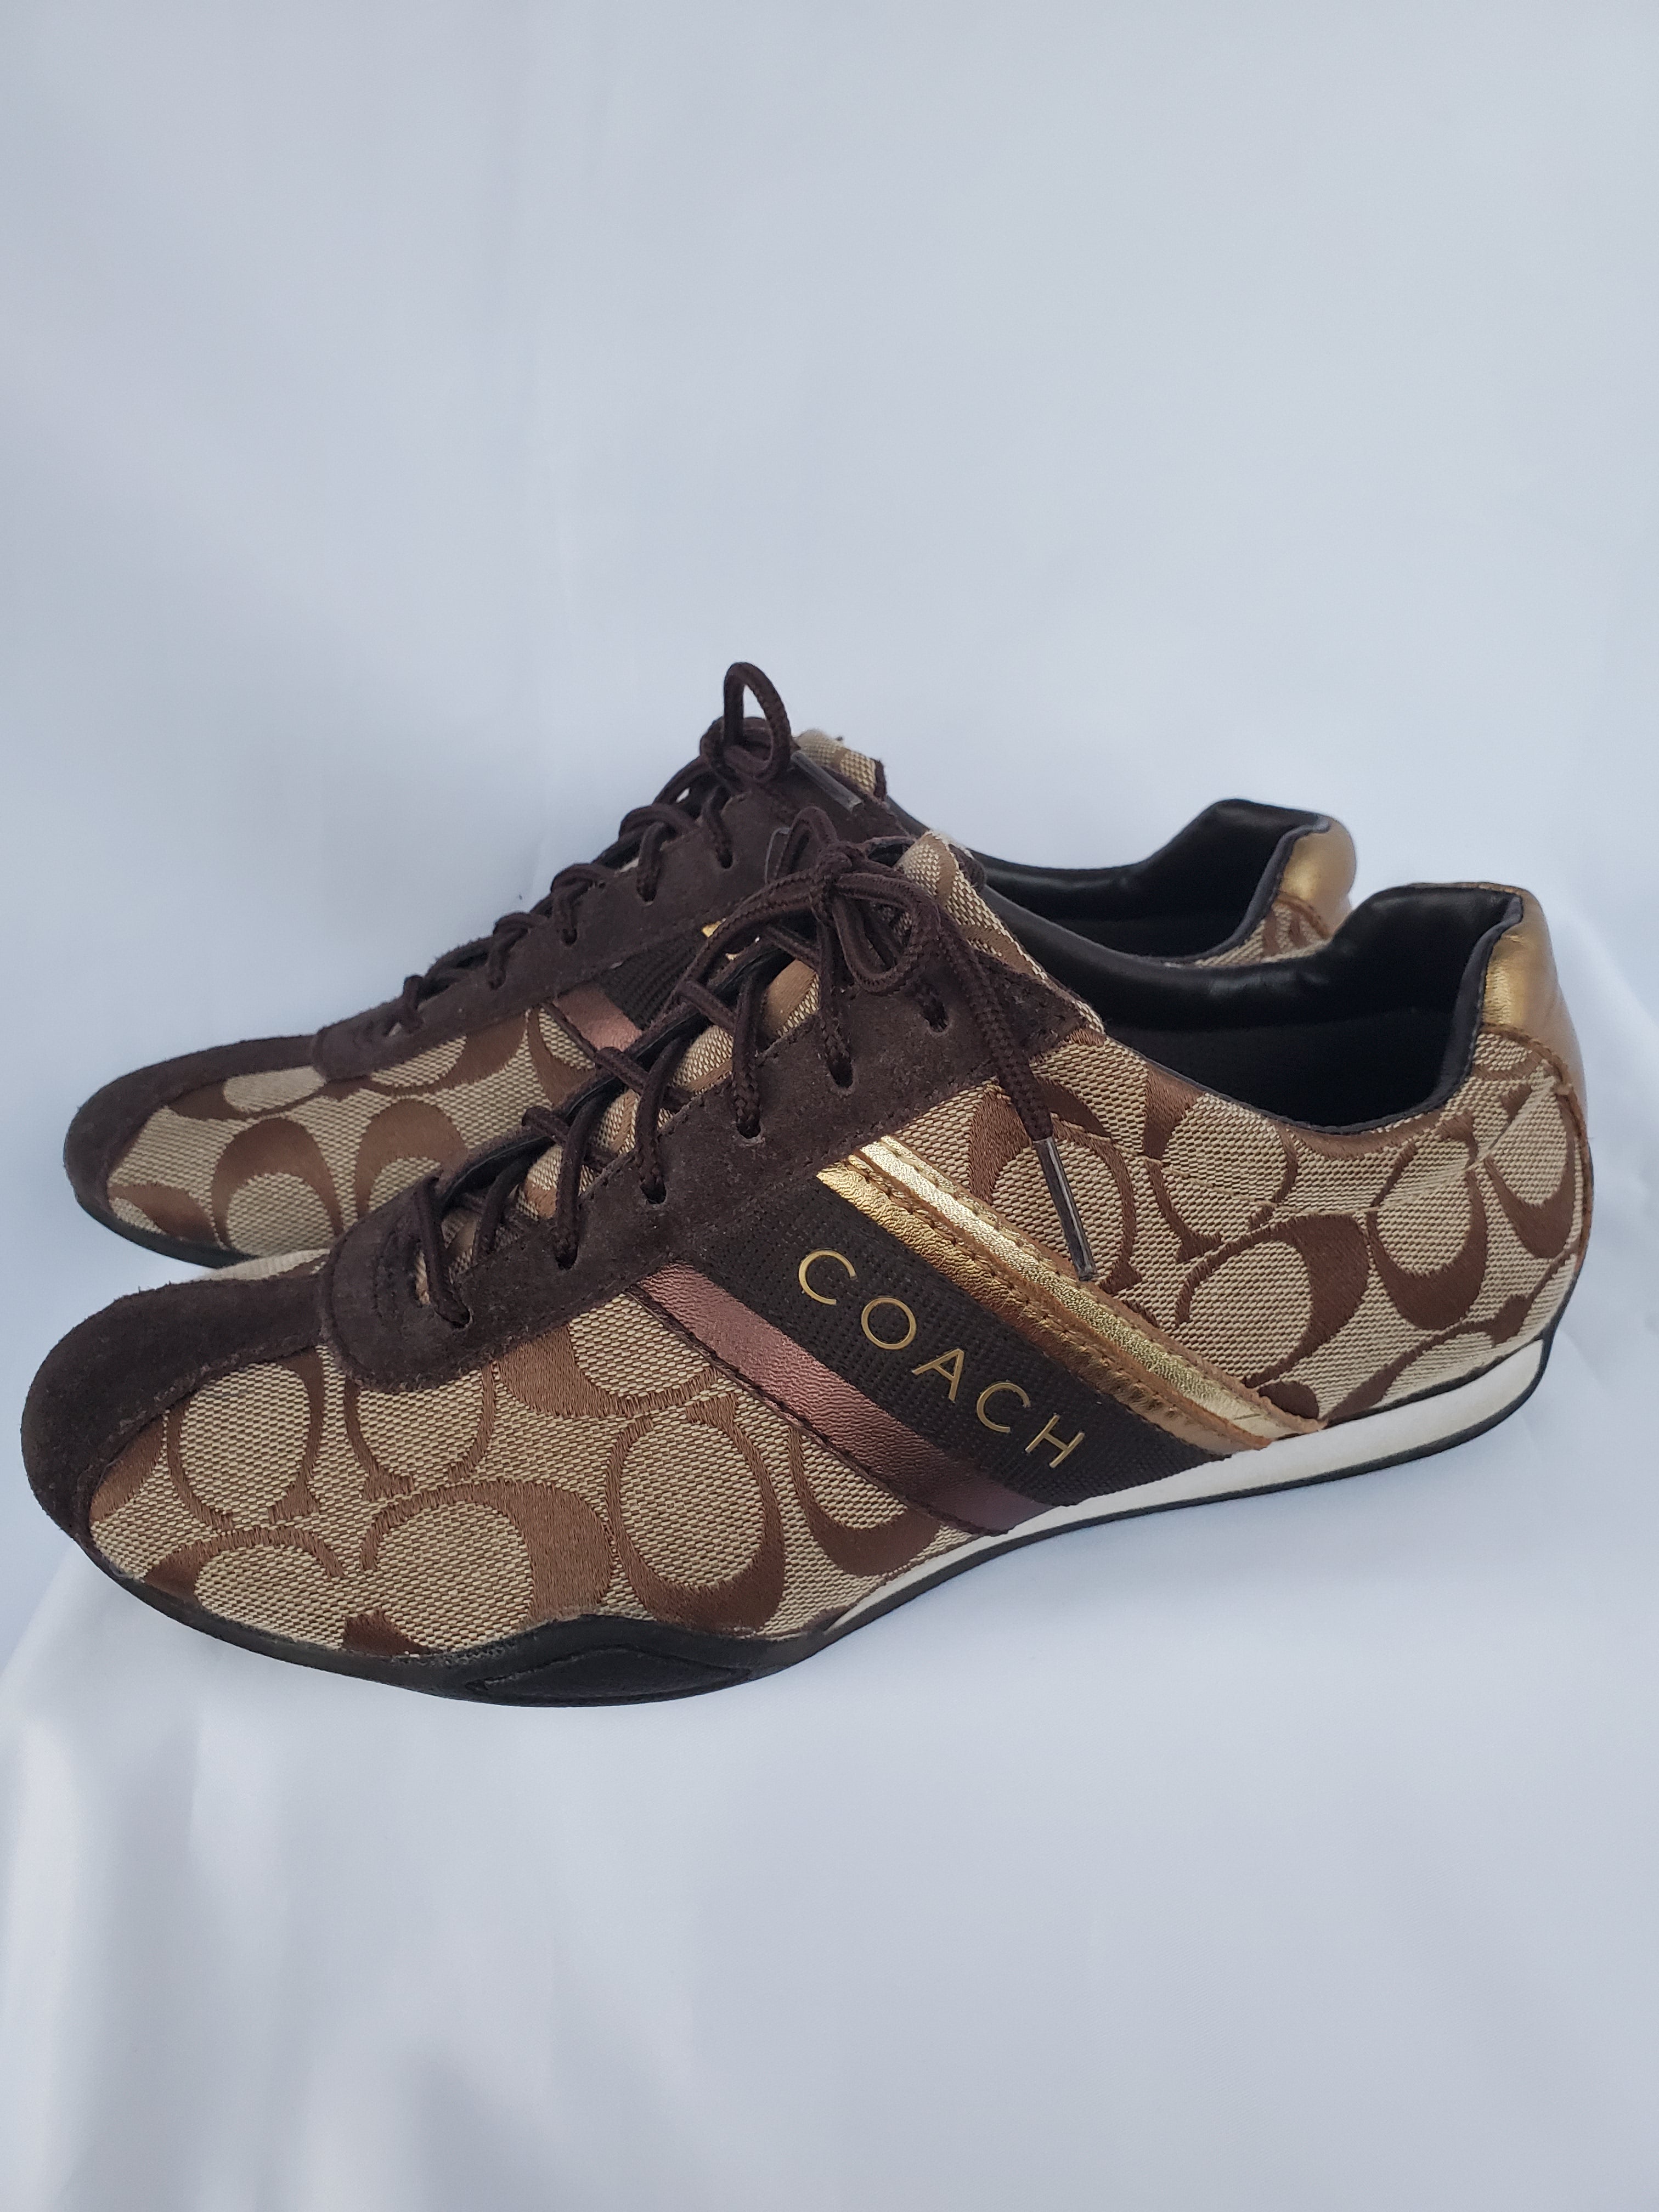 Coach Tennis Shoes Size 8 M EU 38.5 Brown and Bronze Q582 JAYME